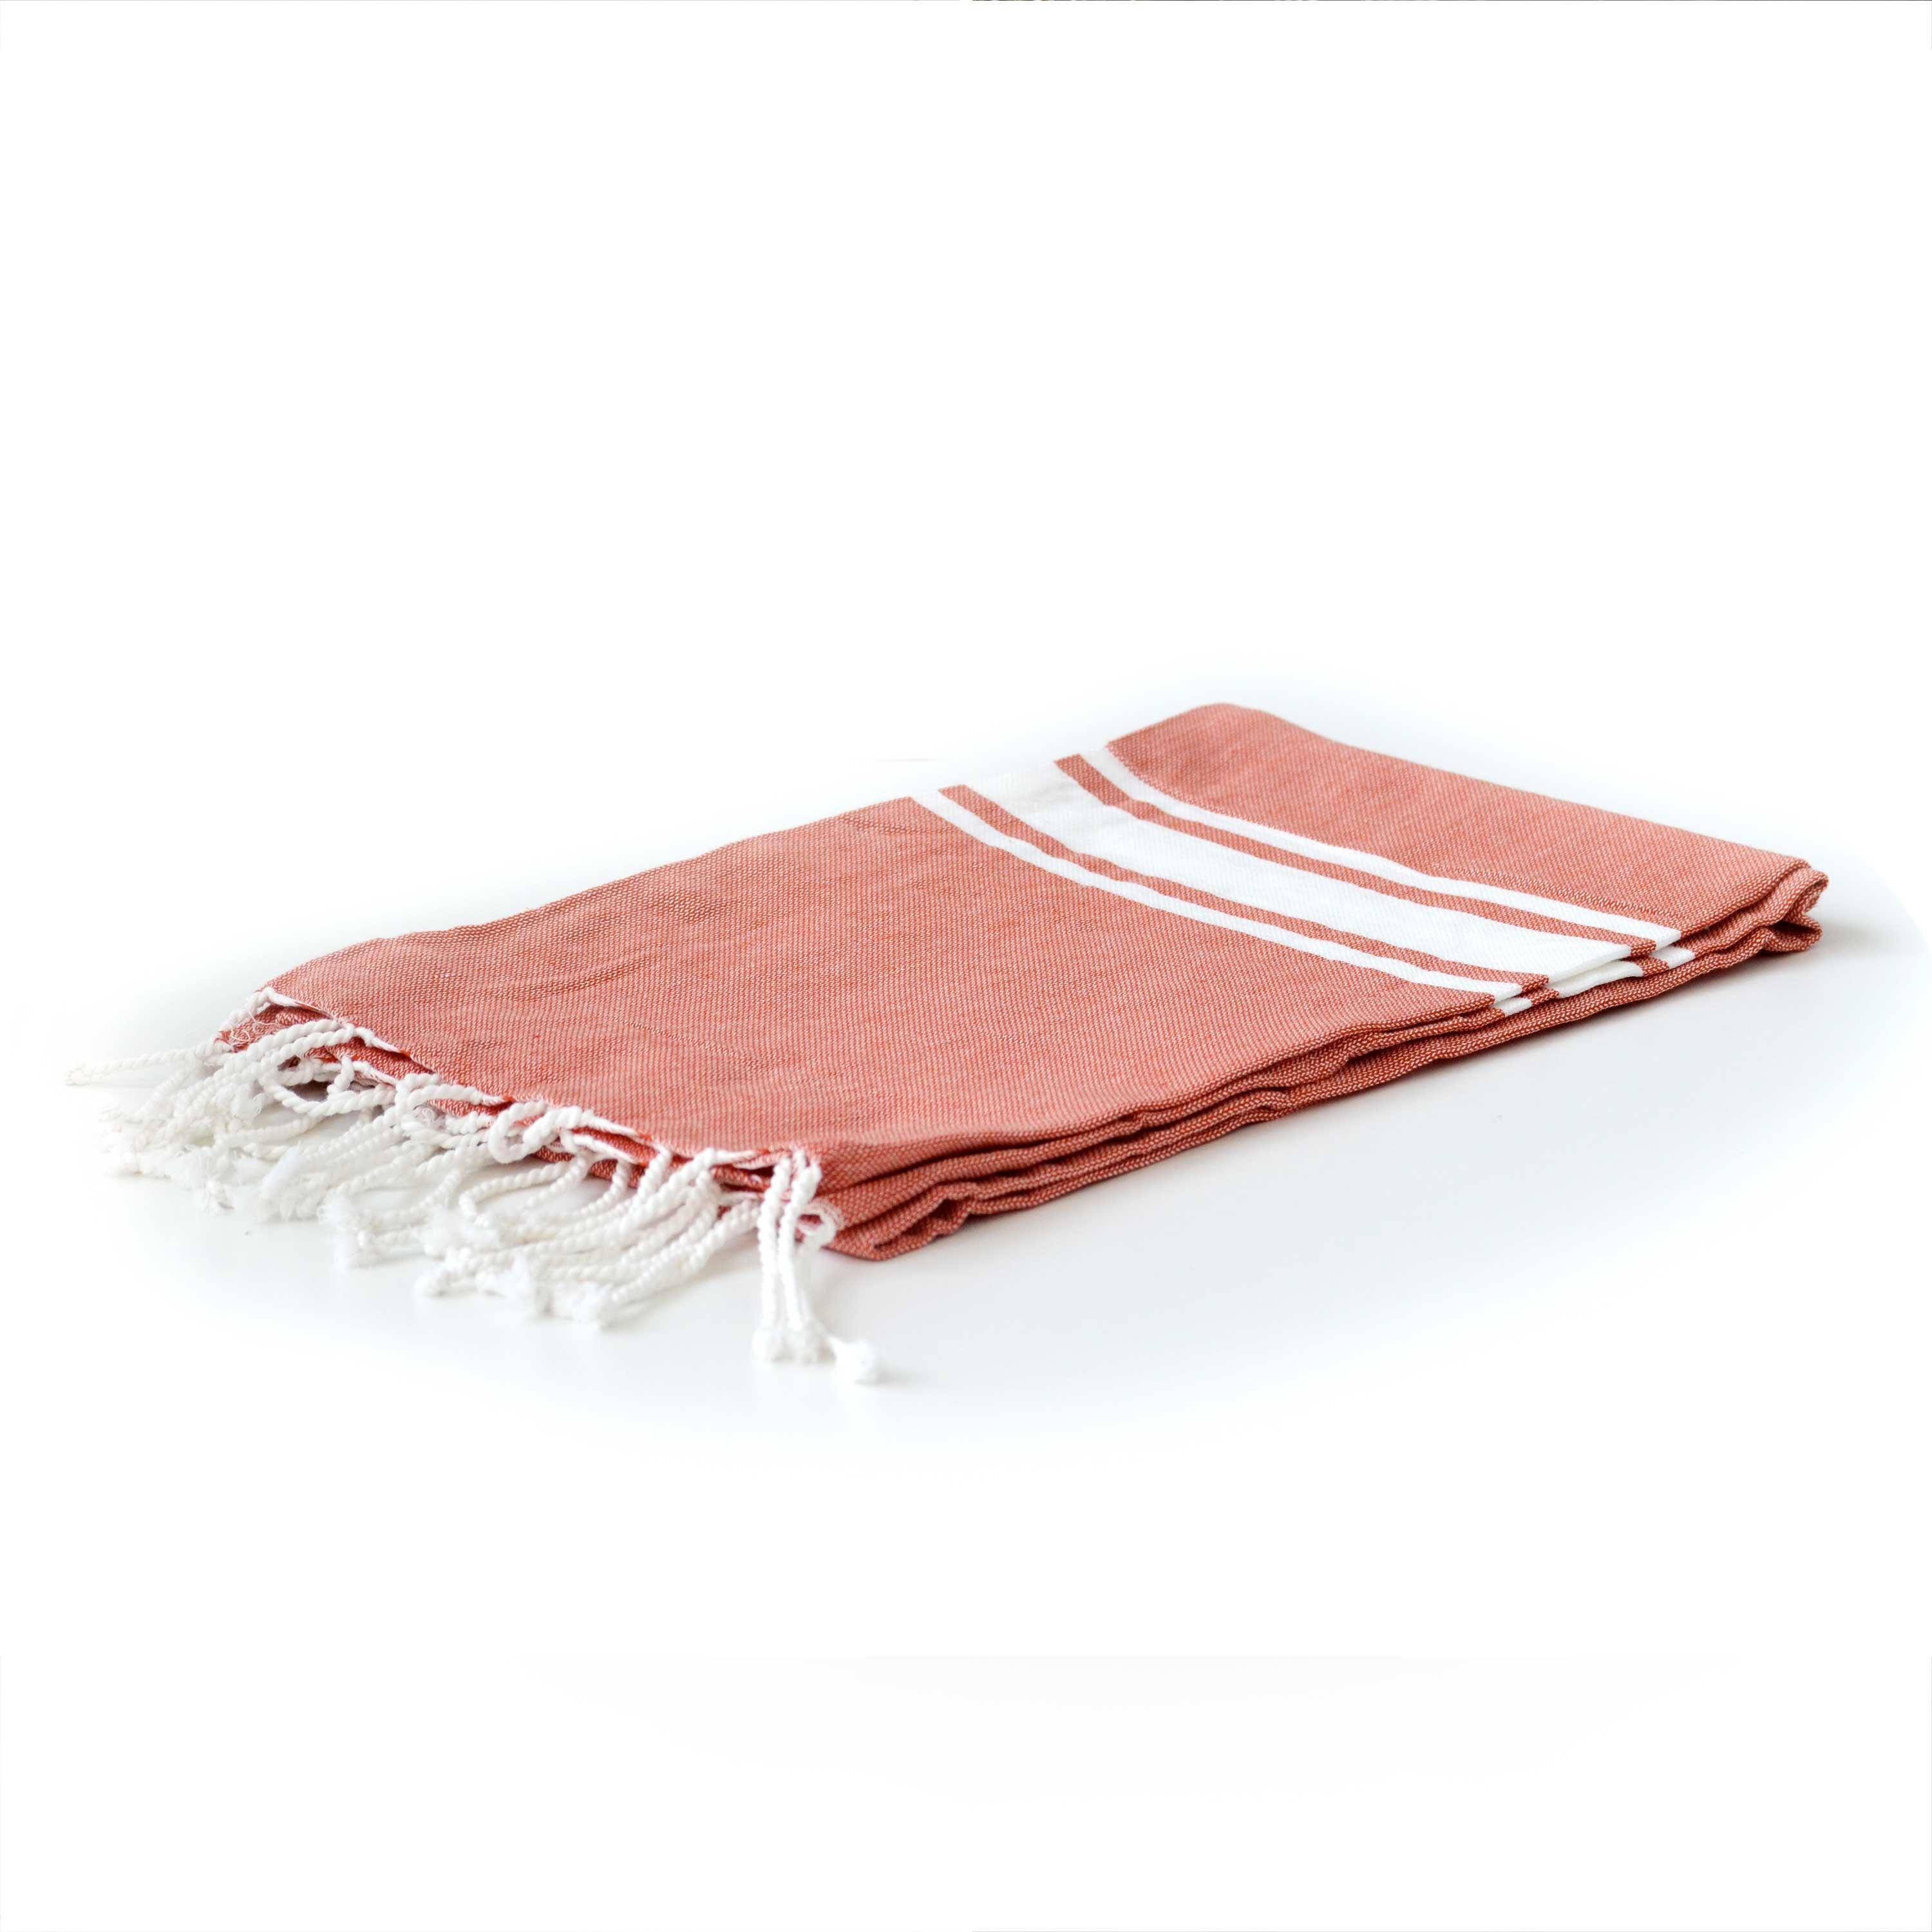 Fouta – 190x100cm – Oranje, Tunesische handdoek, 100% katoen, rechthoekig Photo2